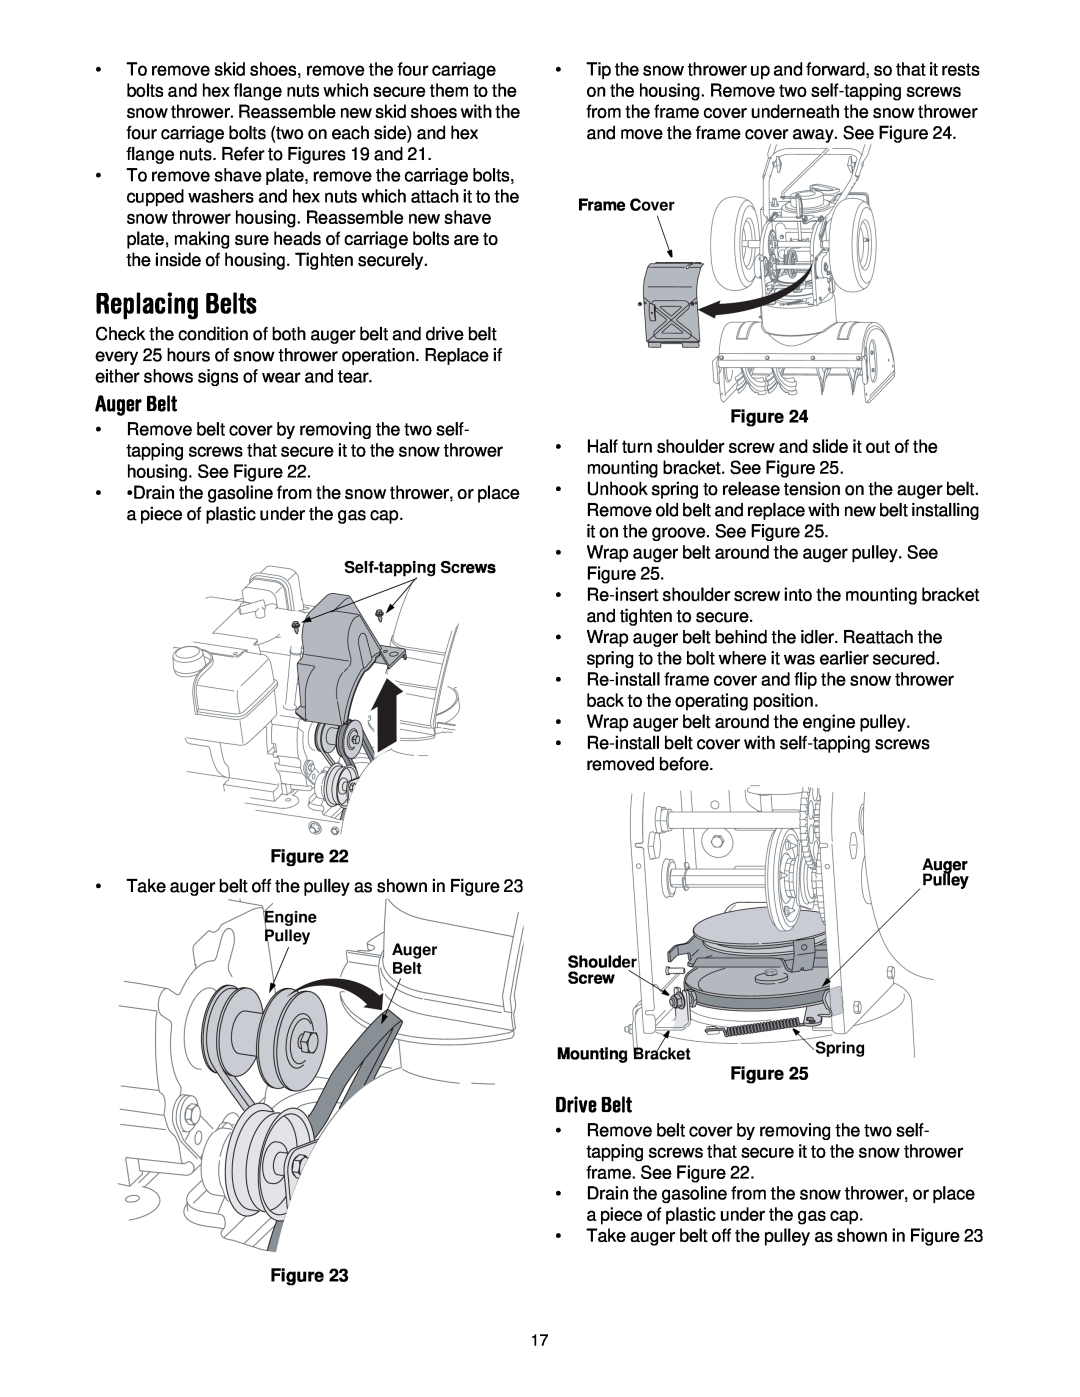 MTD 60-3753-6, 60-3754-4 manual Replacing Belts, Auger Belt, Drive Belt, Figure 